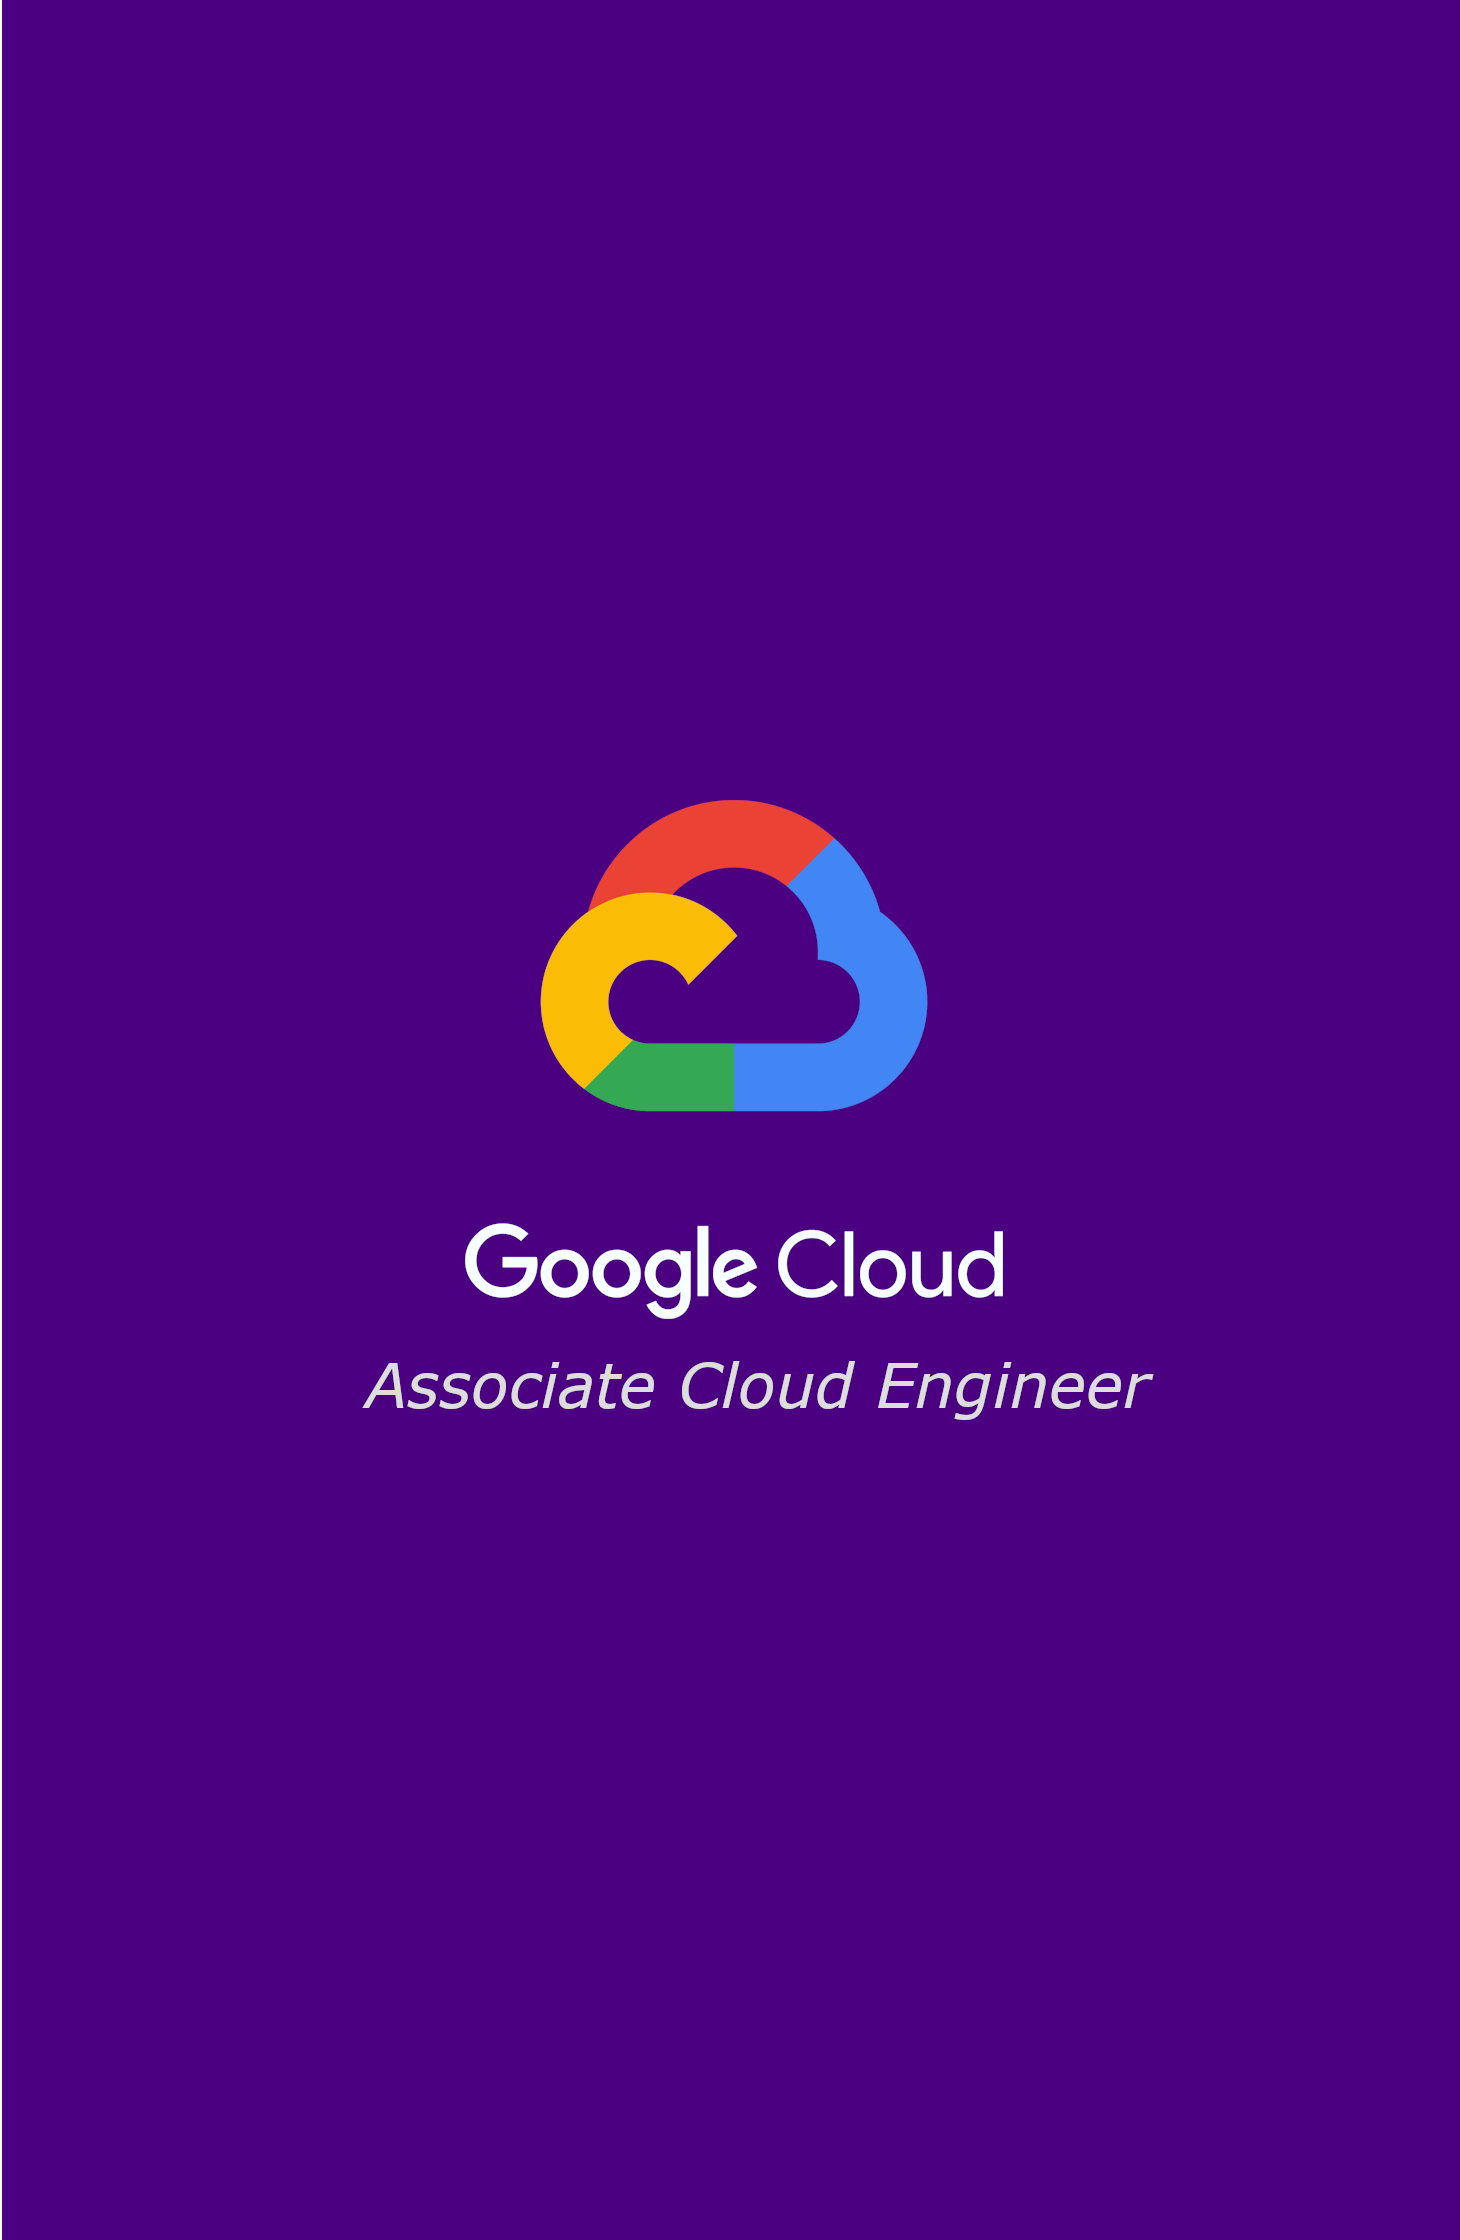 Google Cloud Fundamentals: Core Infraestructure - Introducing Google Cloud -> The Google Cloud Network